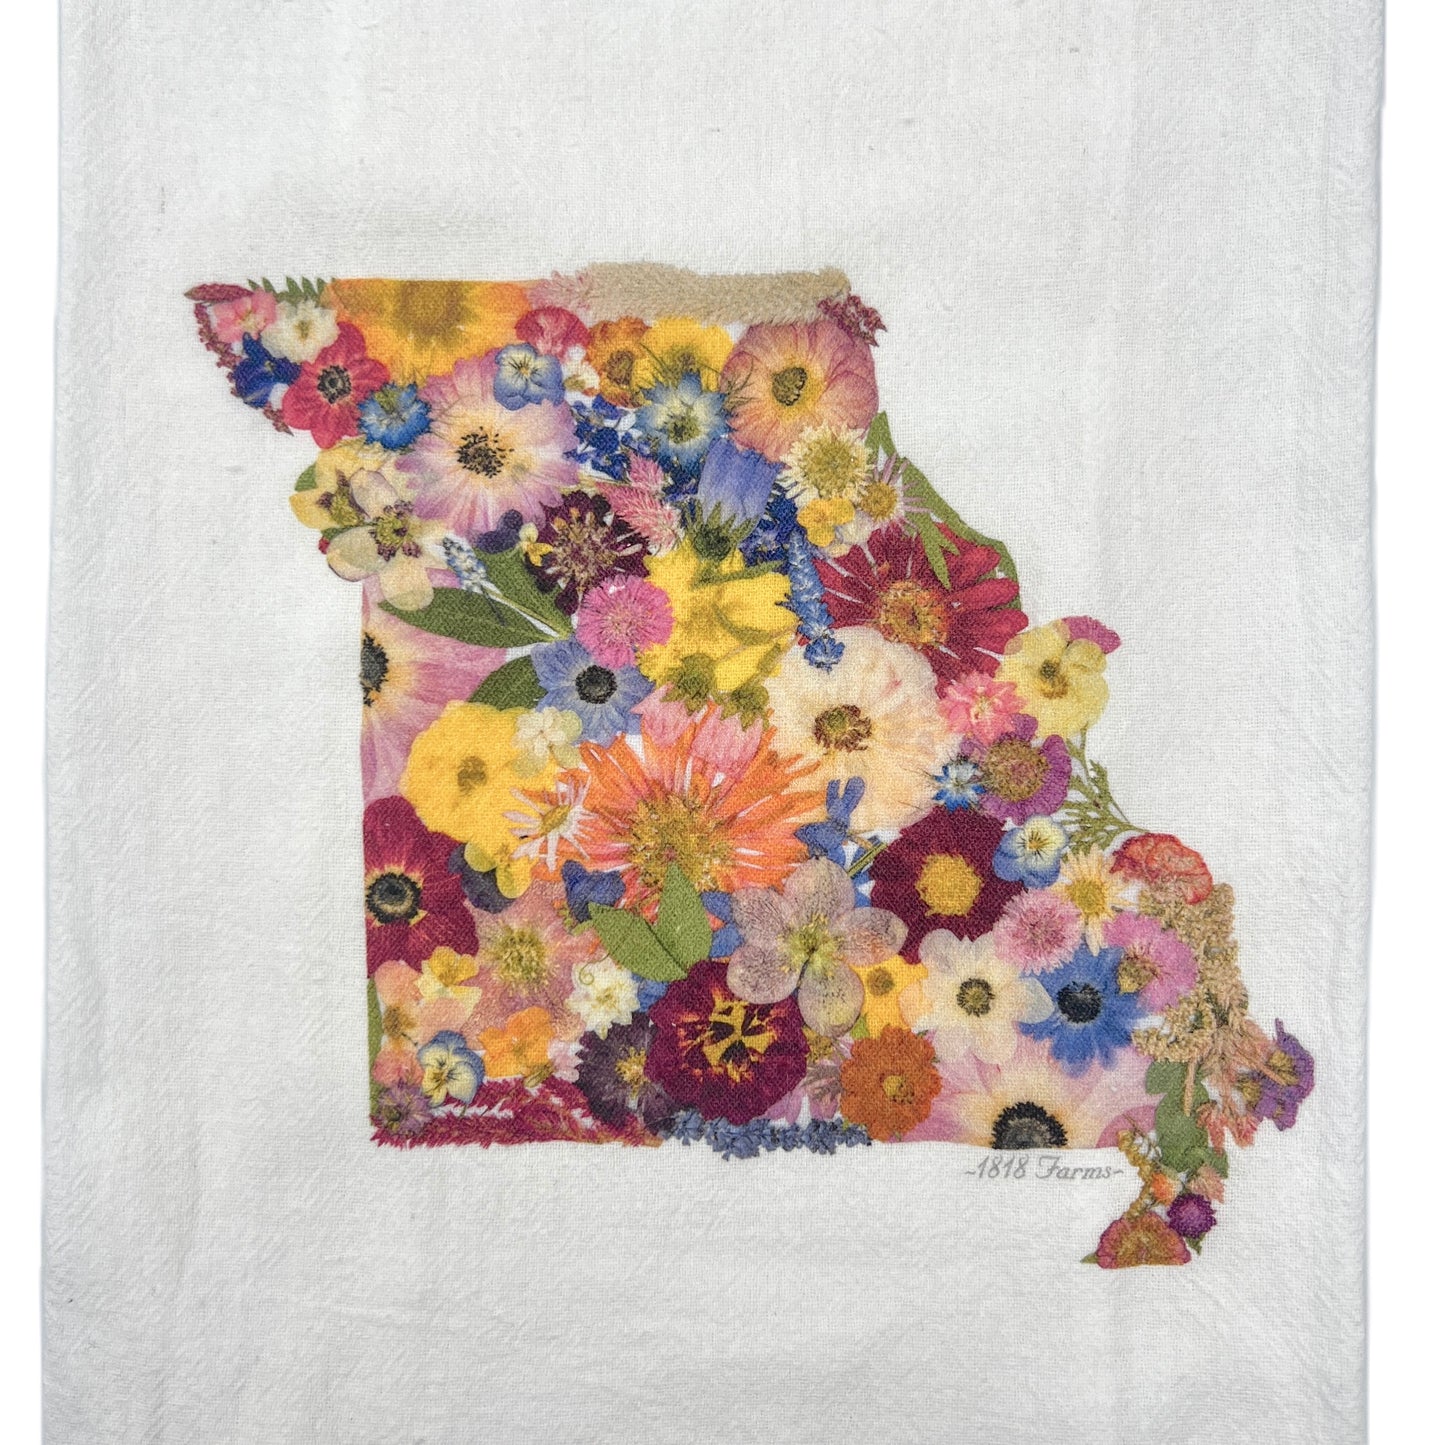 Missouri Themed Flour Sack Towel  - "Where I Bloom" Collection Towel 1818 Farms   